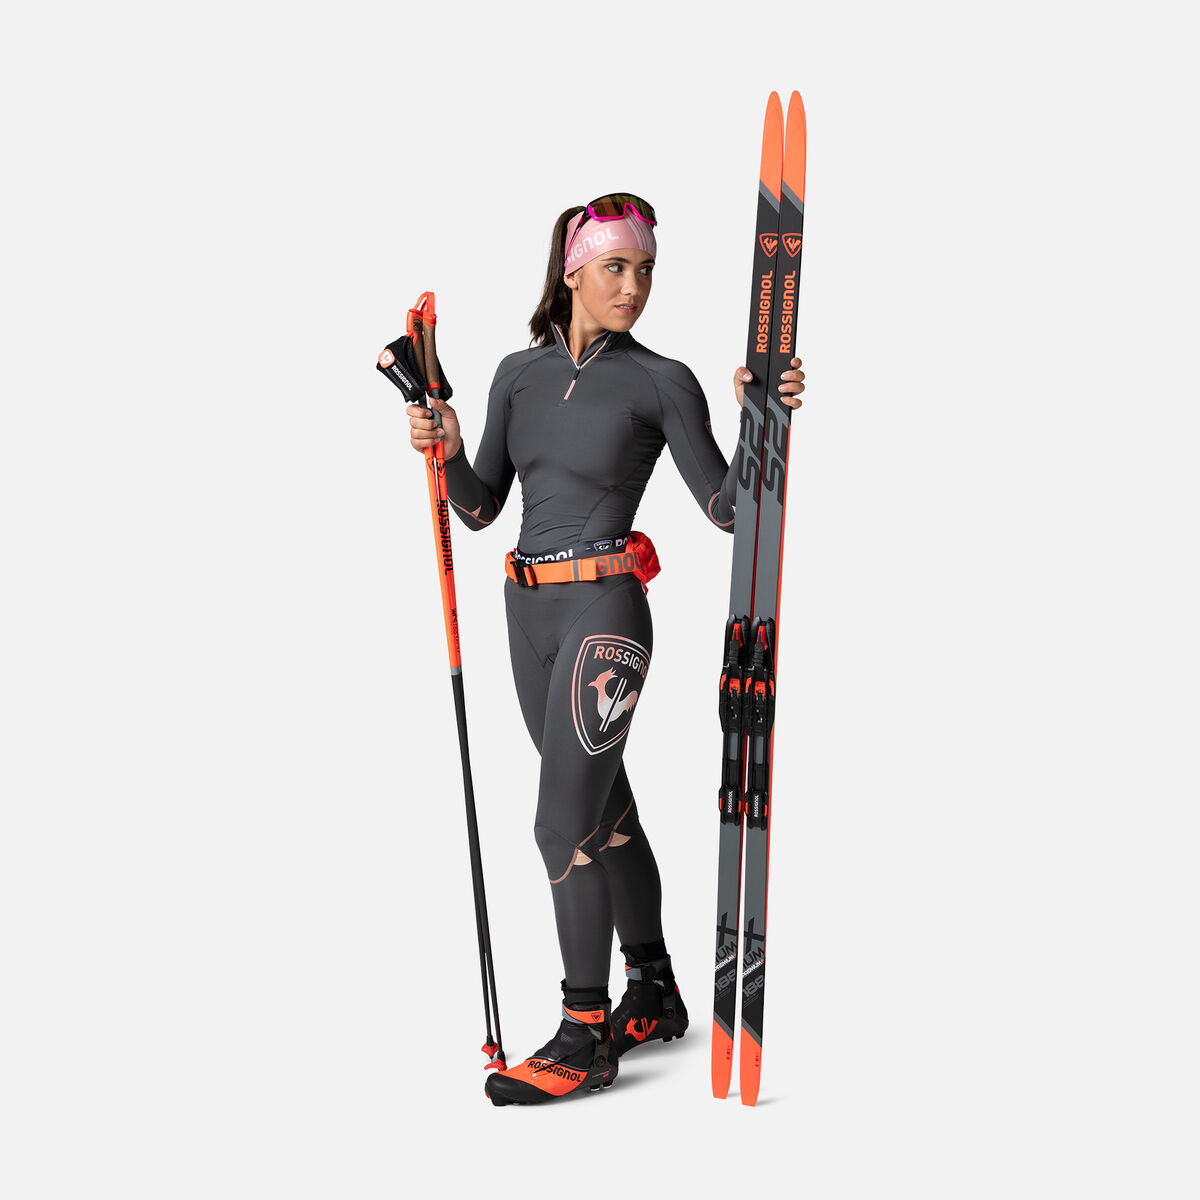 ROSSIGNOL-INFINI COMPRESSION RACE TIGHTS BLACK - Cross-country ski leggings